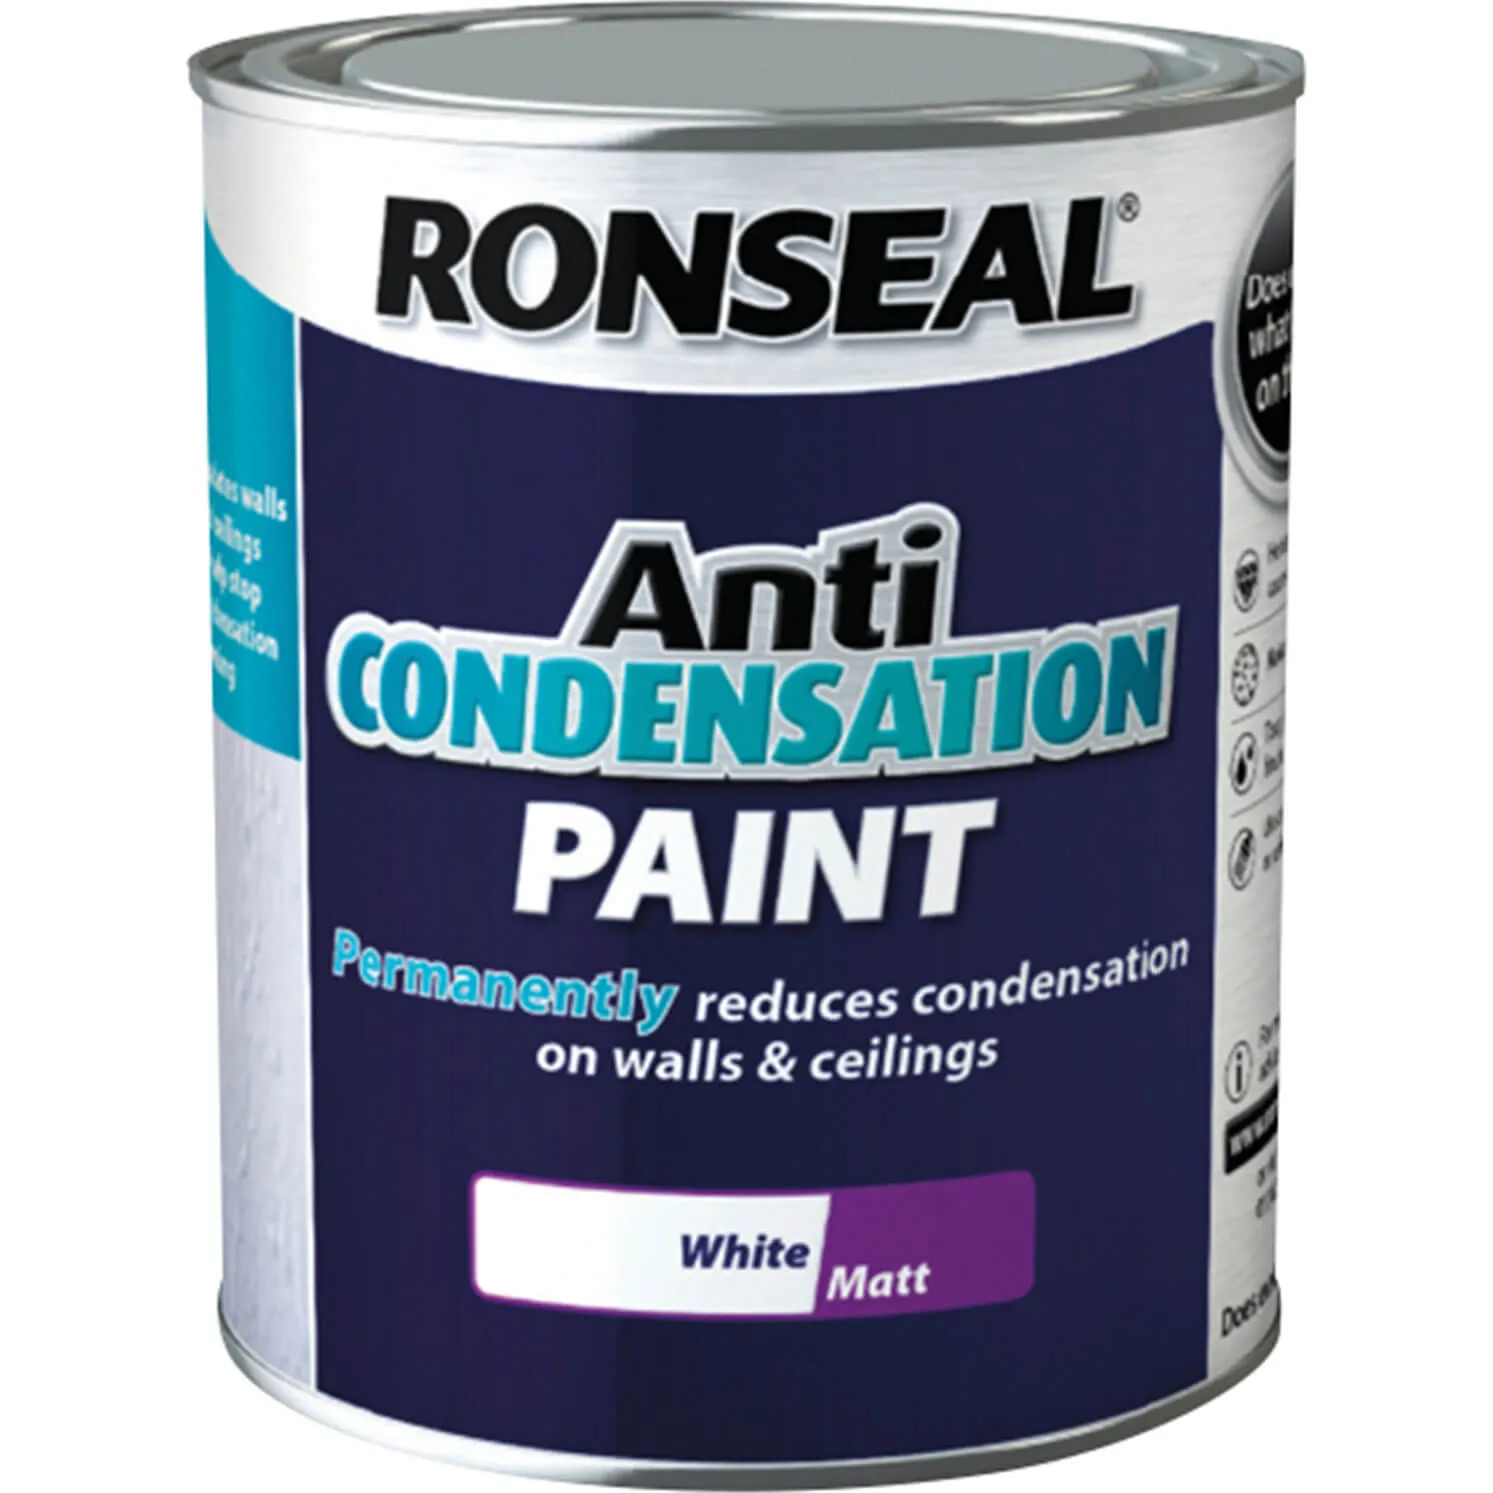 Ronseal Anti Condensation Paint White Matt - 2.5l